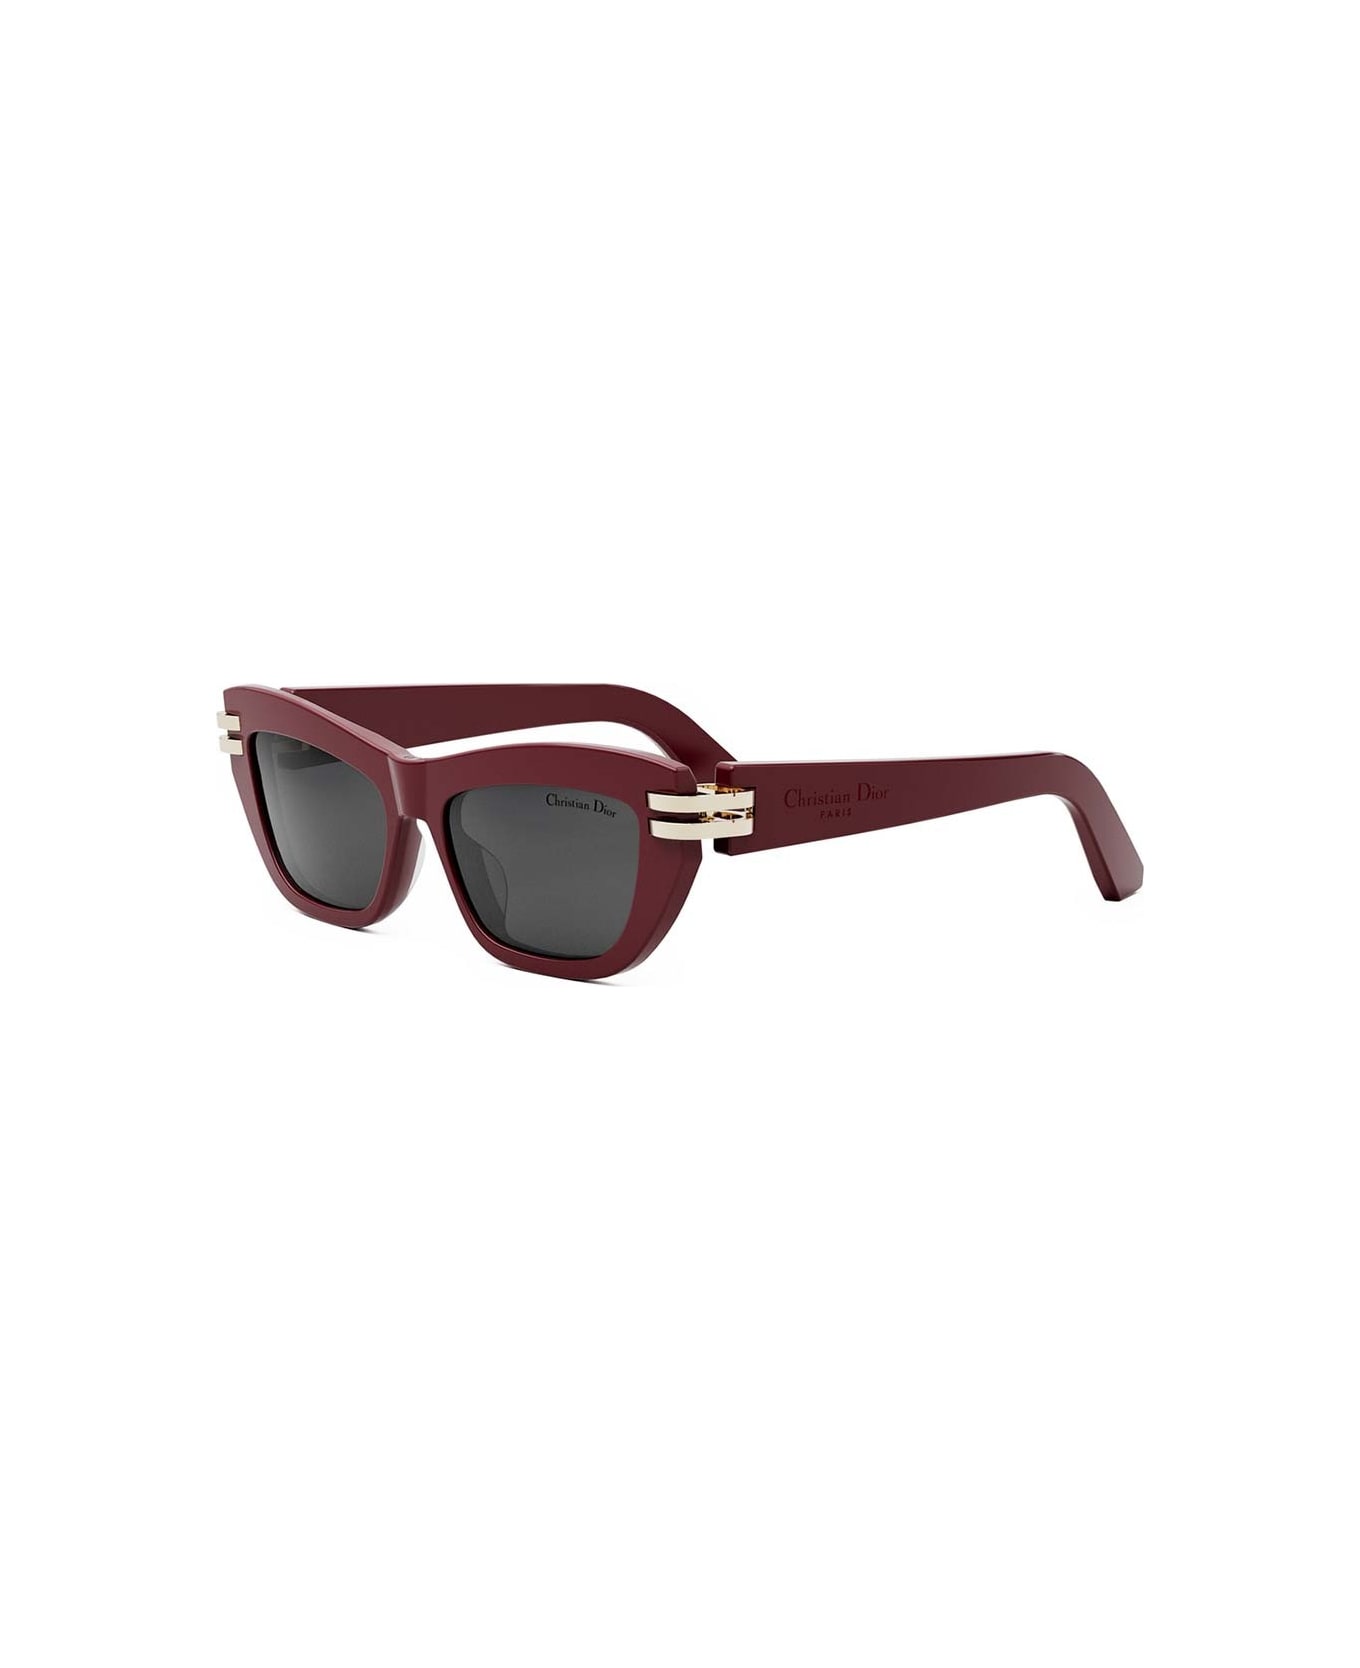 Dior Eyewear Sunglasses - Rosso/Grigio